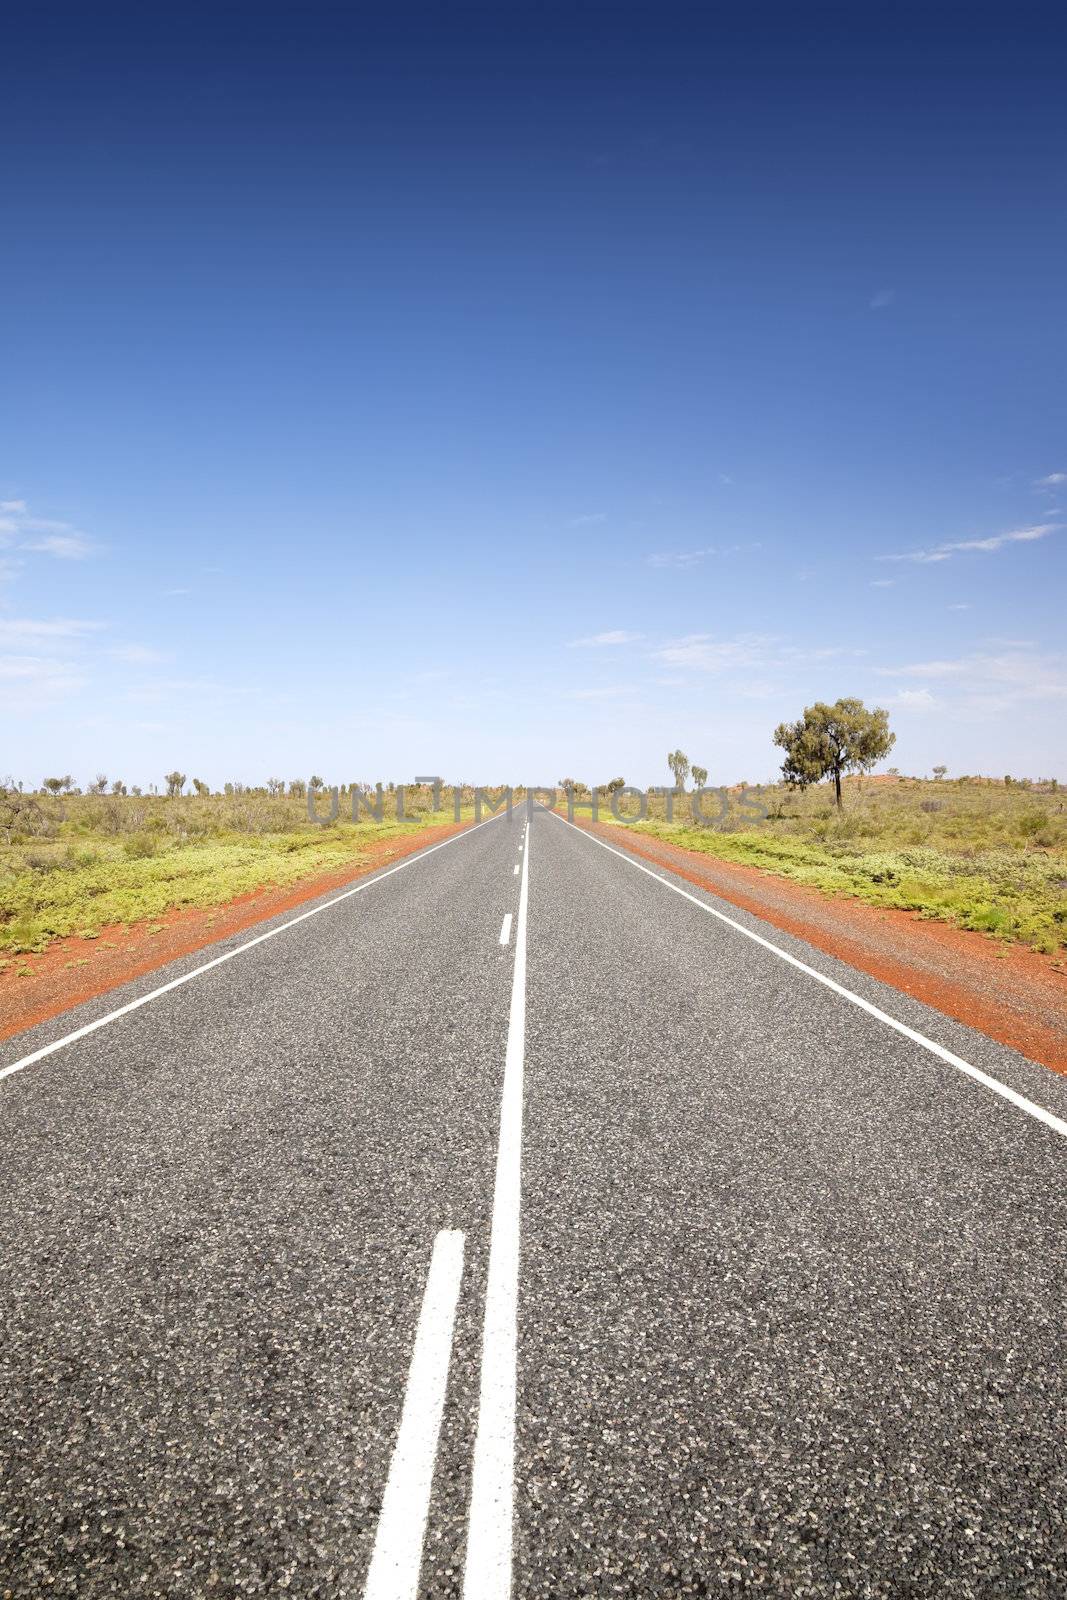 A photography of an australian road under a blue sky